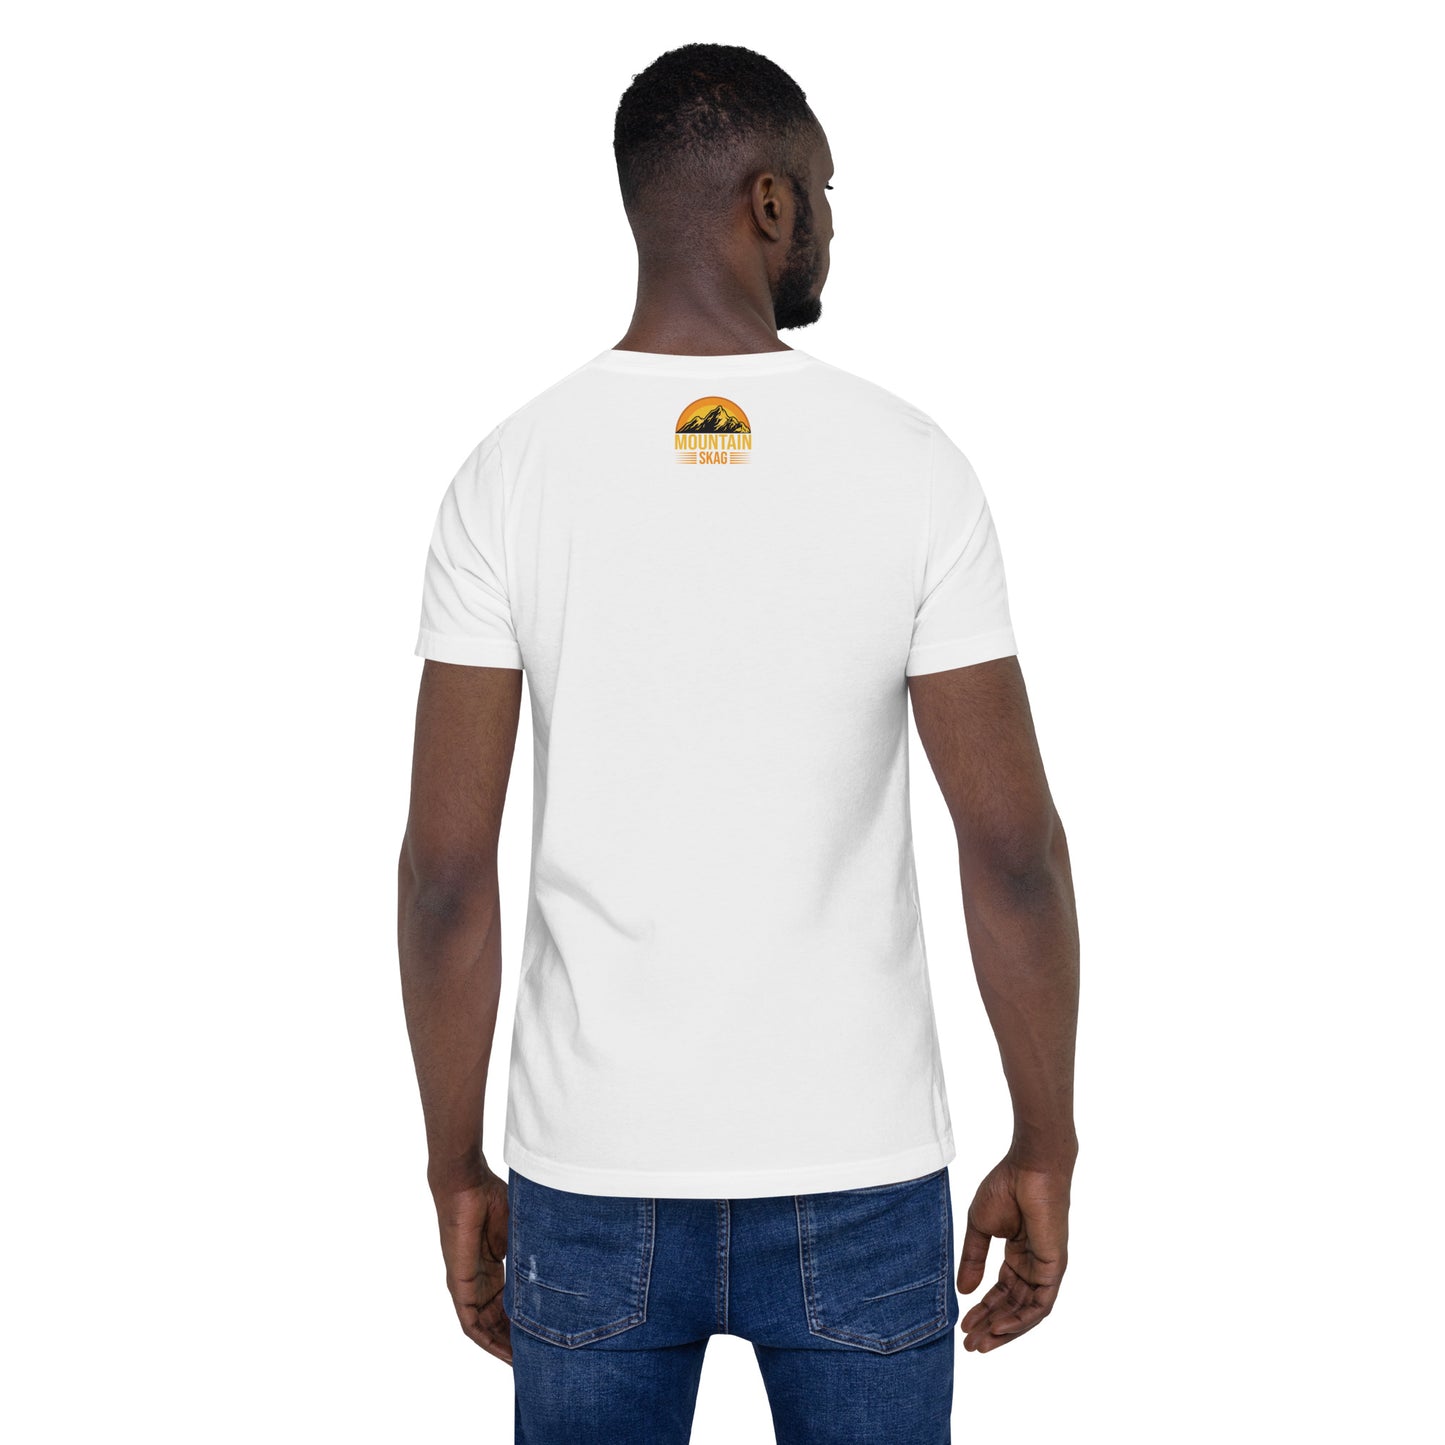 Jumbo T-shirt (Unisex)